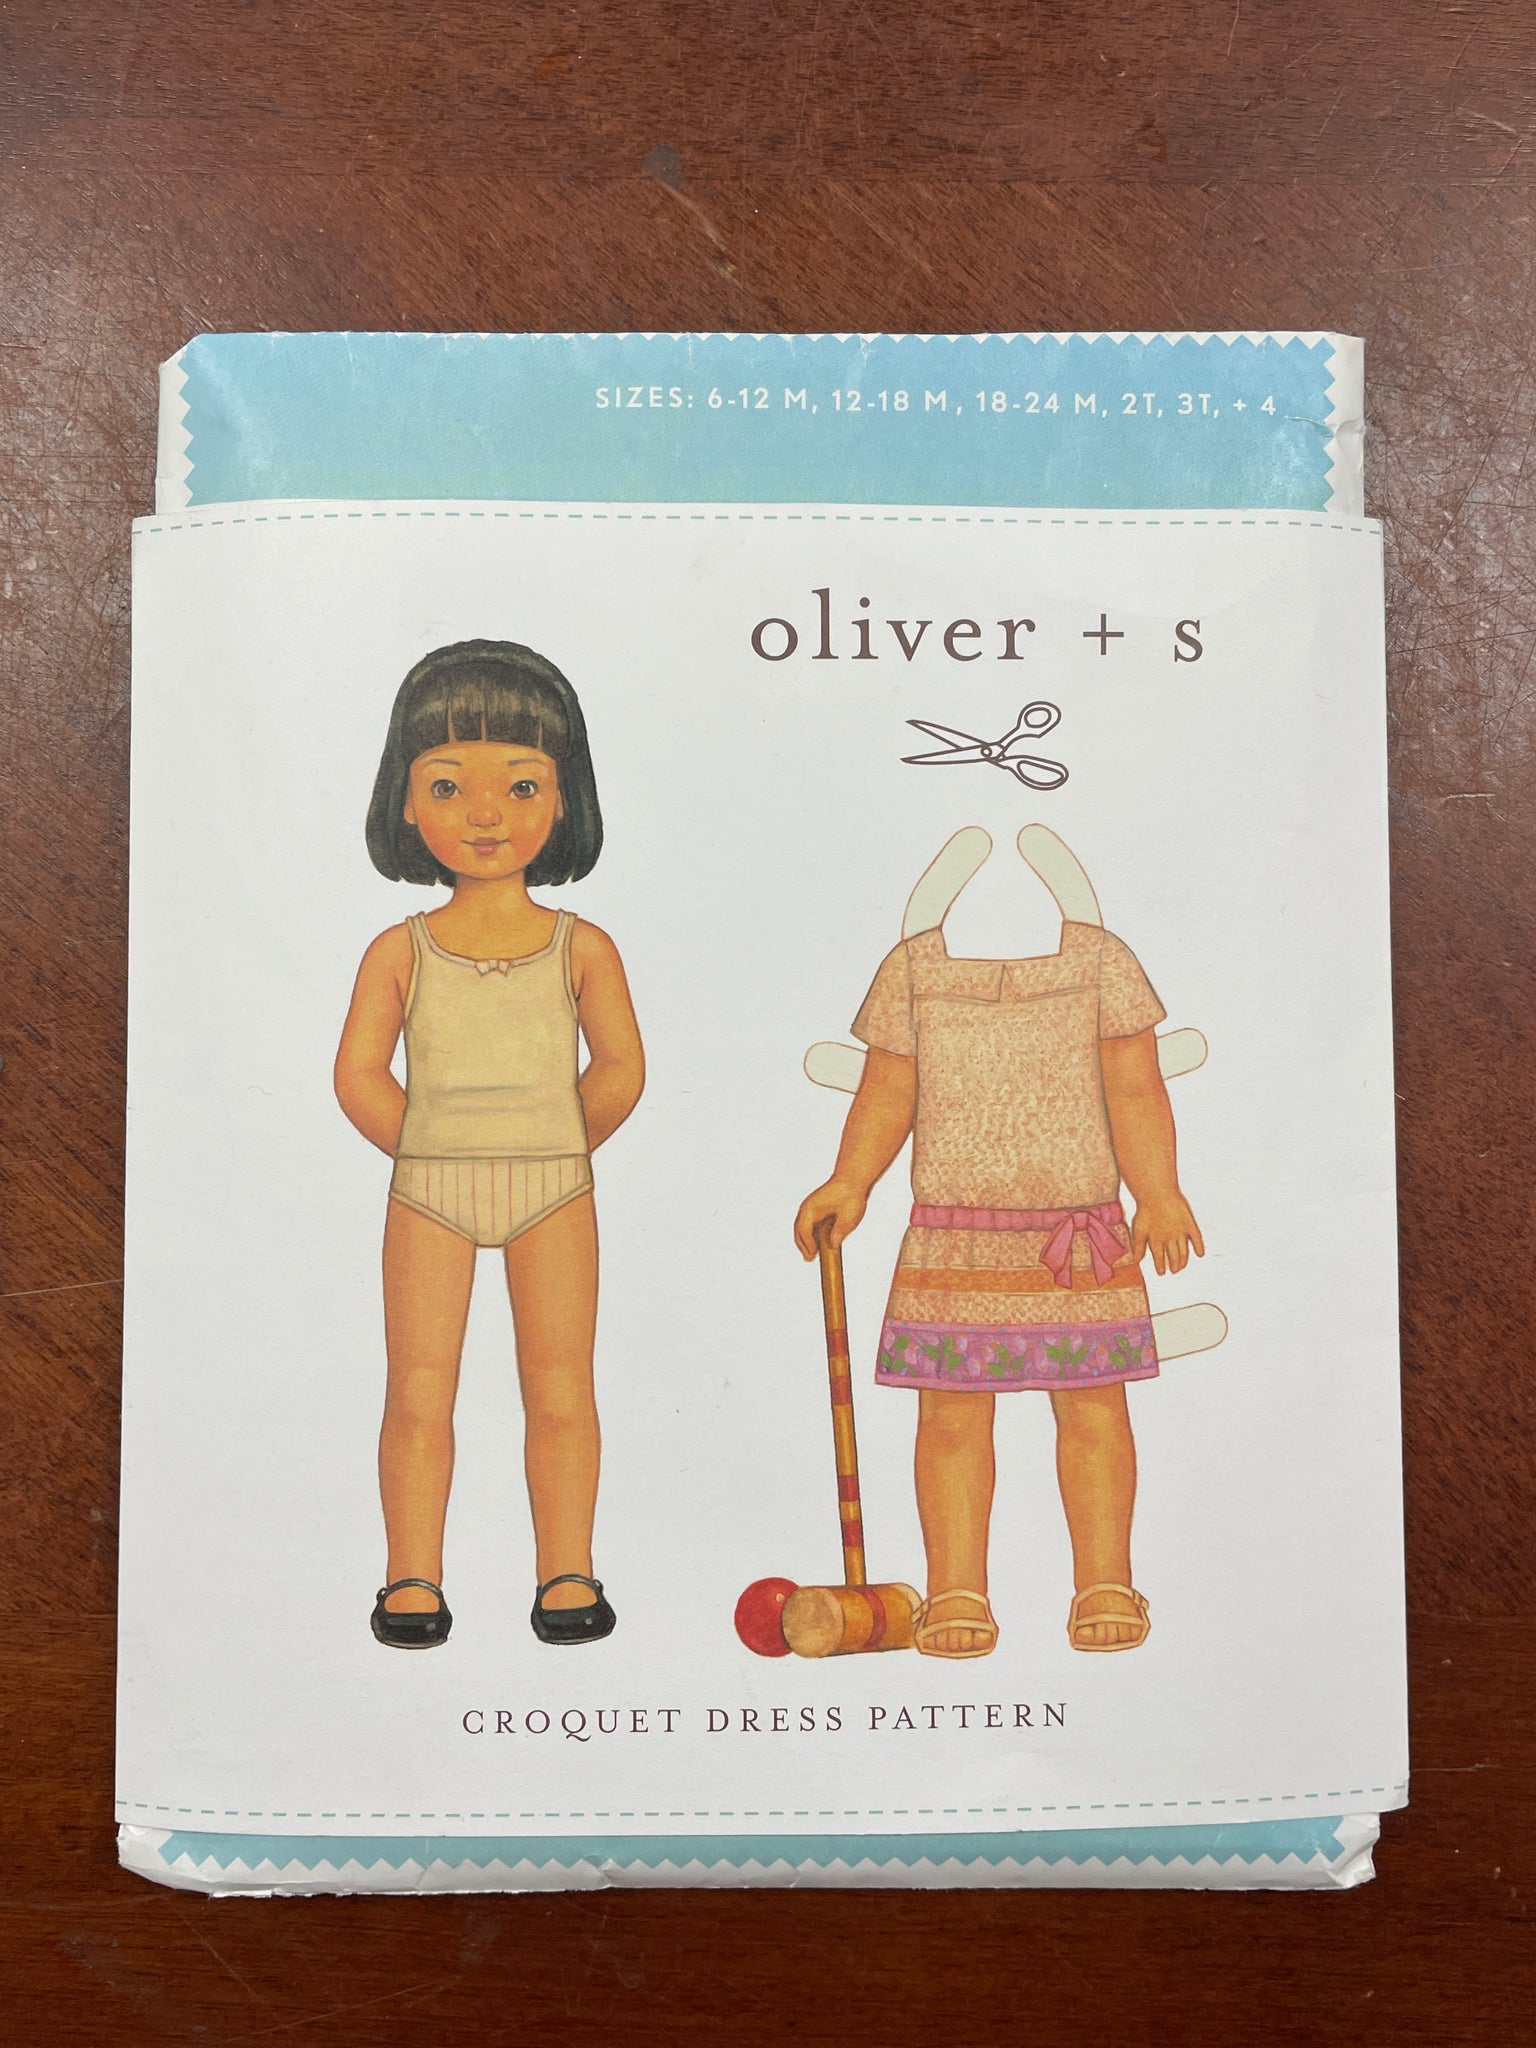 2012 Oliver + S Pattern - Child's "Croquet Dress Pattern"